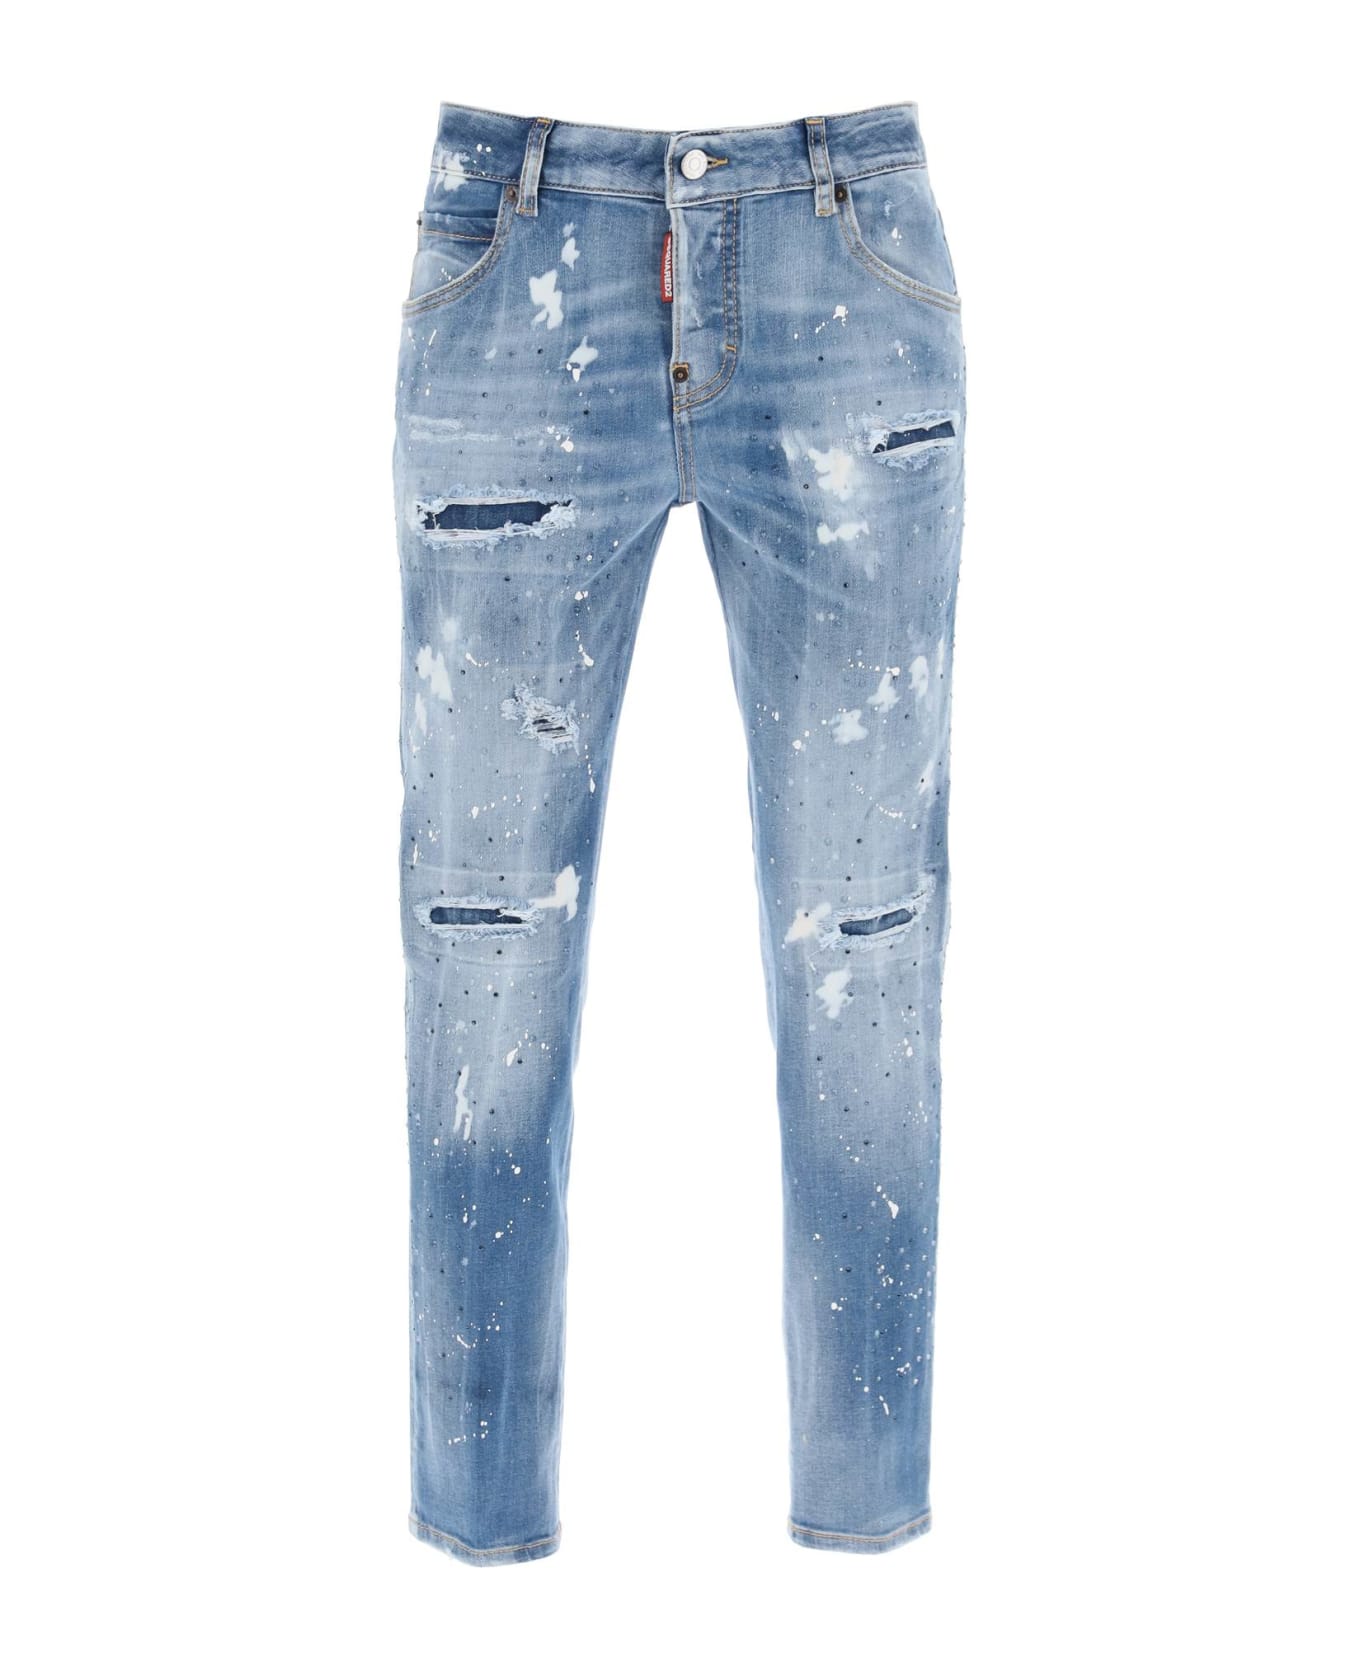 Dsquared2 Cool Girl Jeans - NAVY BLUE (Light blue) デニム